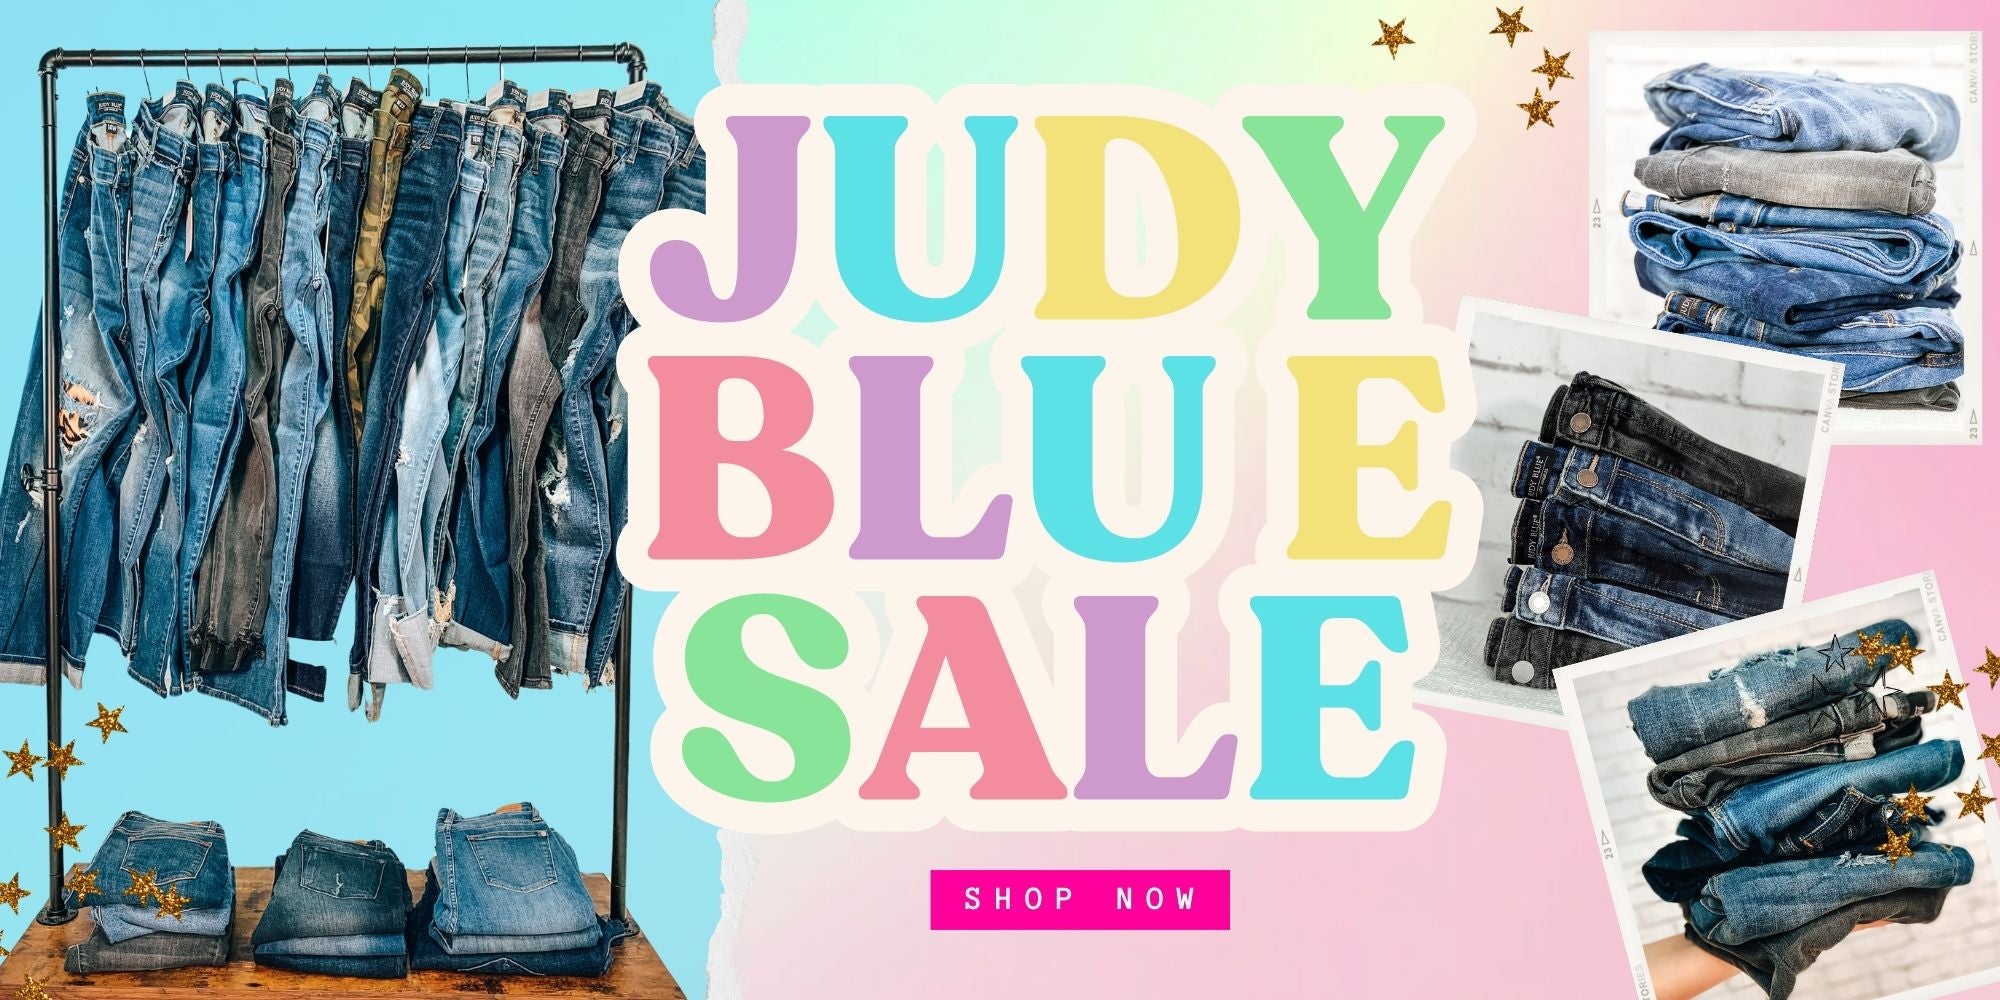 Major Judy Blue Sale